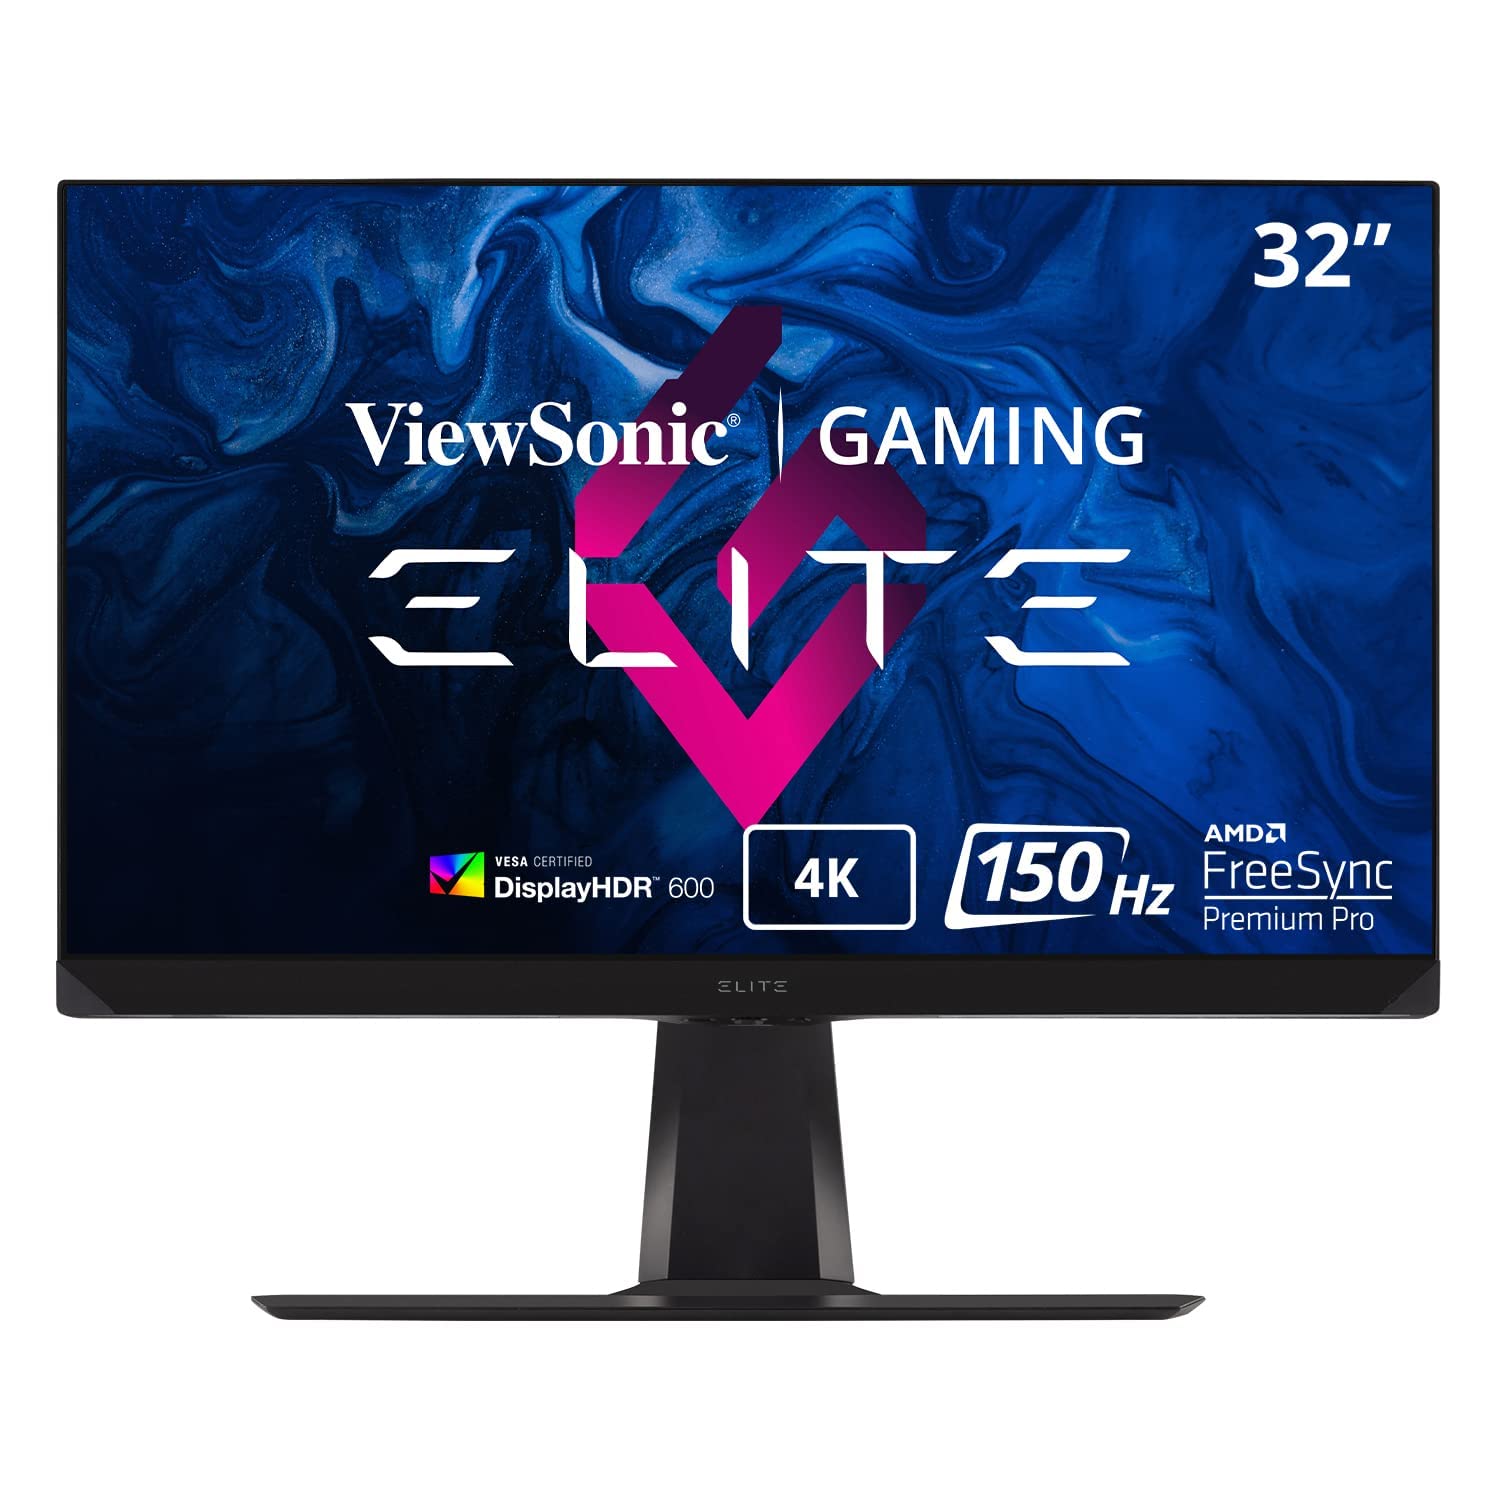 ViewSonic ELITE XG320U 32 Inch 4K UHD 1ms 150Hz Gaming Monitor with FreeSync Premium Pro, HDR 600, HDMI, DisplayPort, USB, and Advanced Ergonomics for Esports , Black